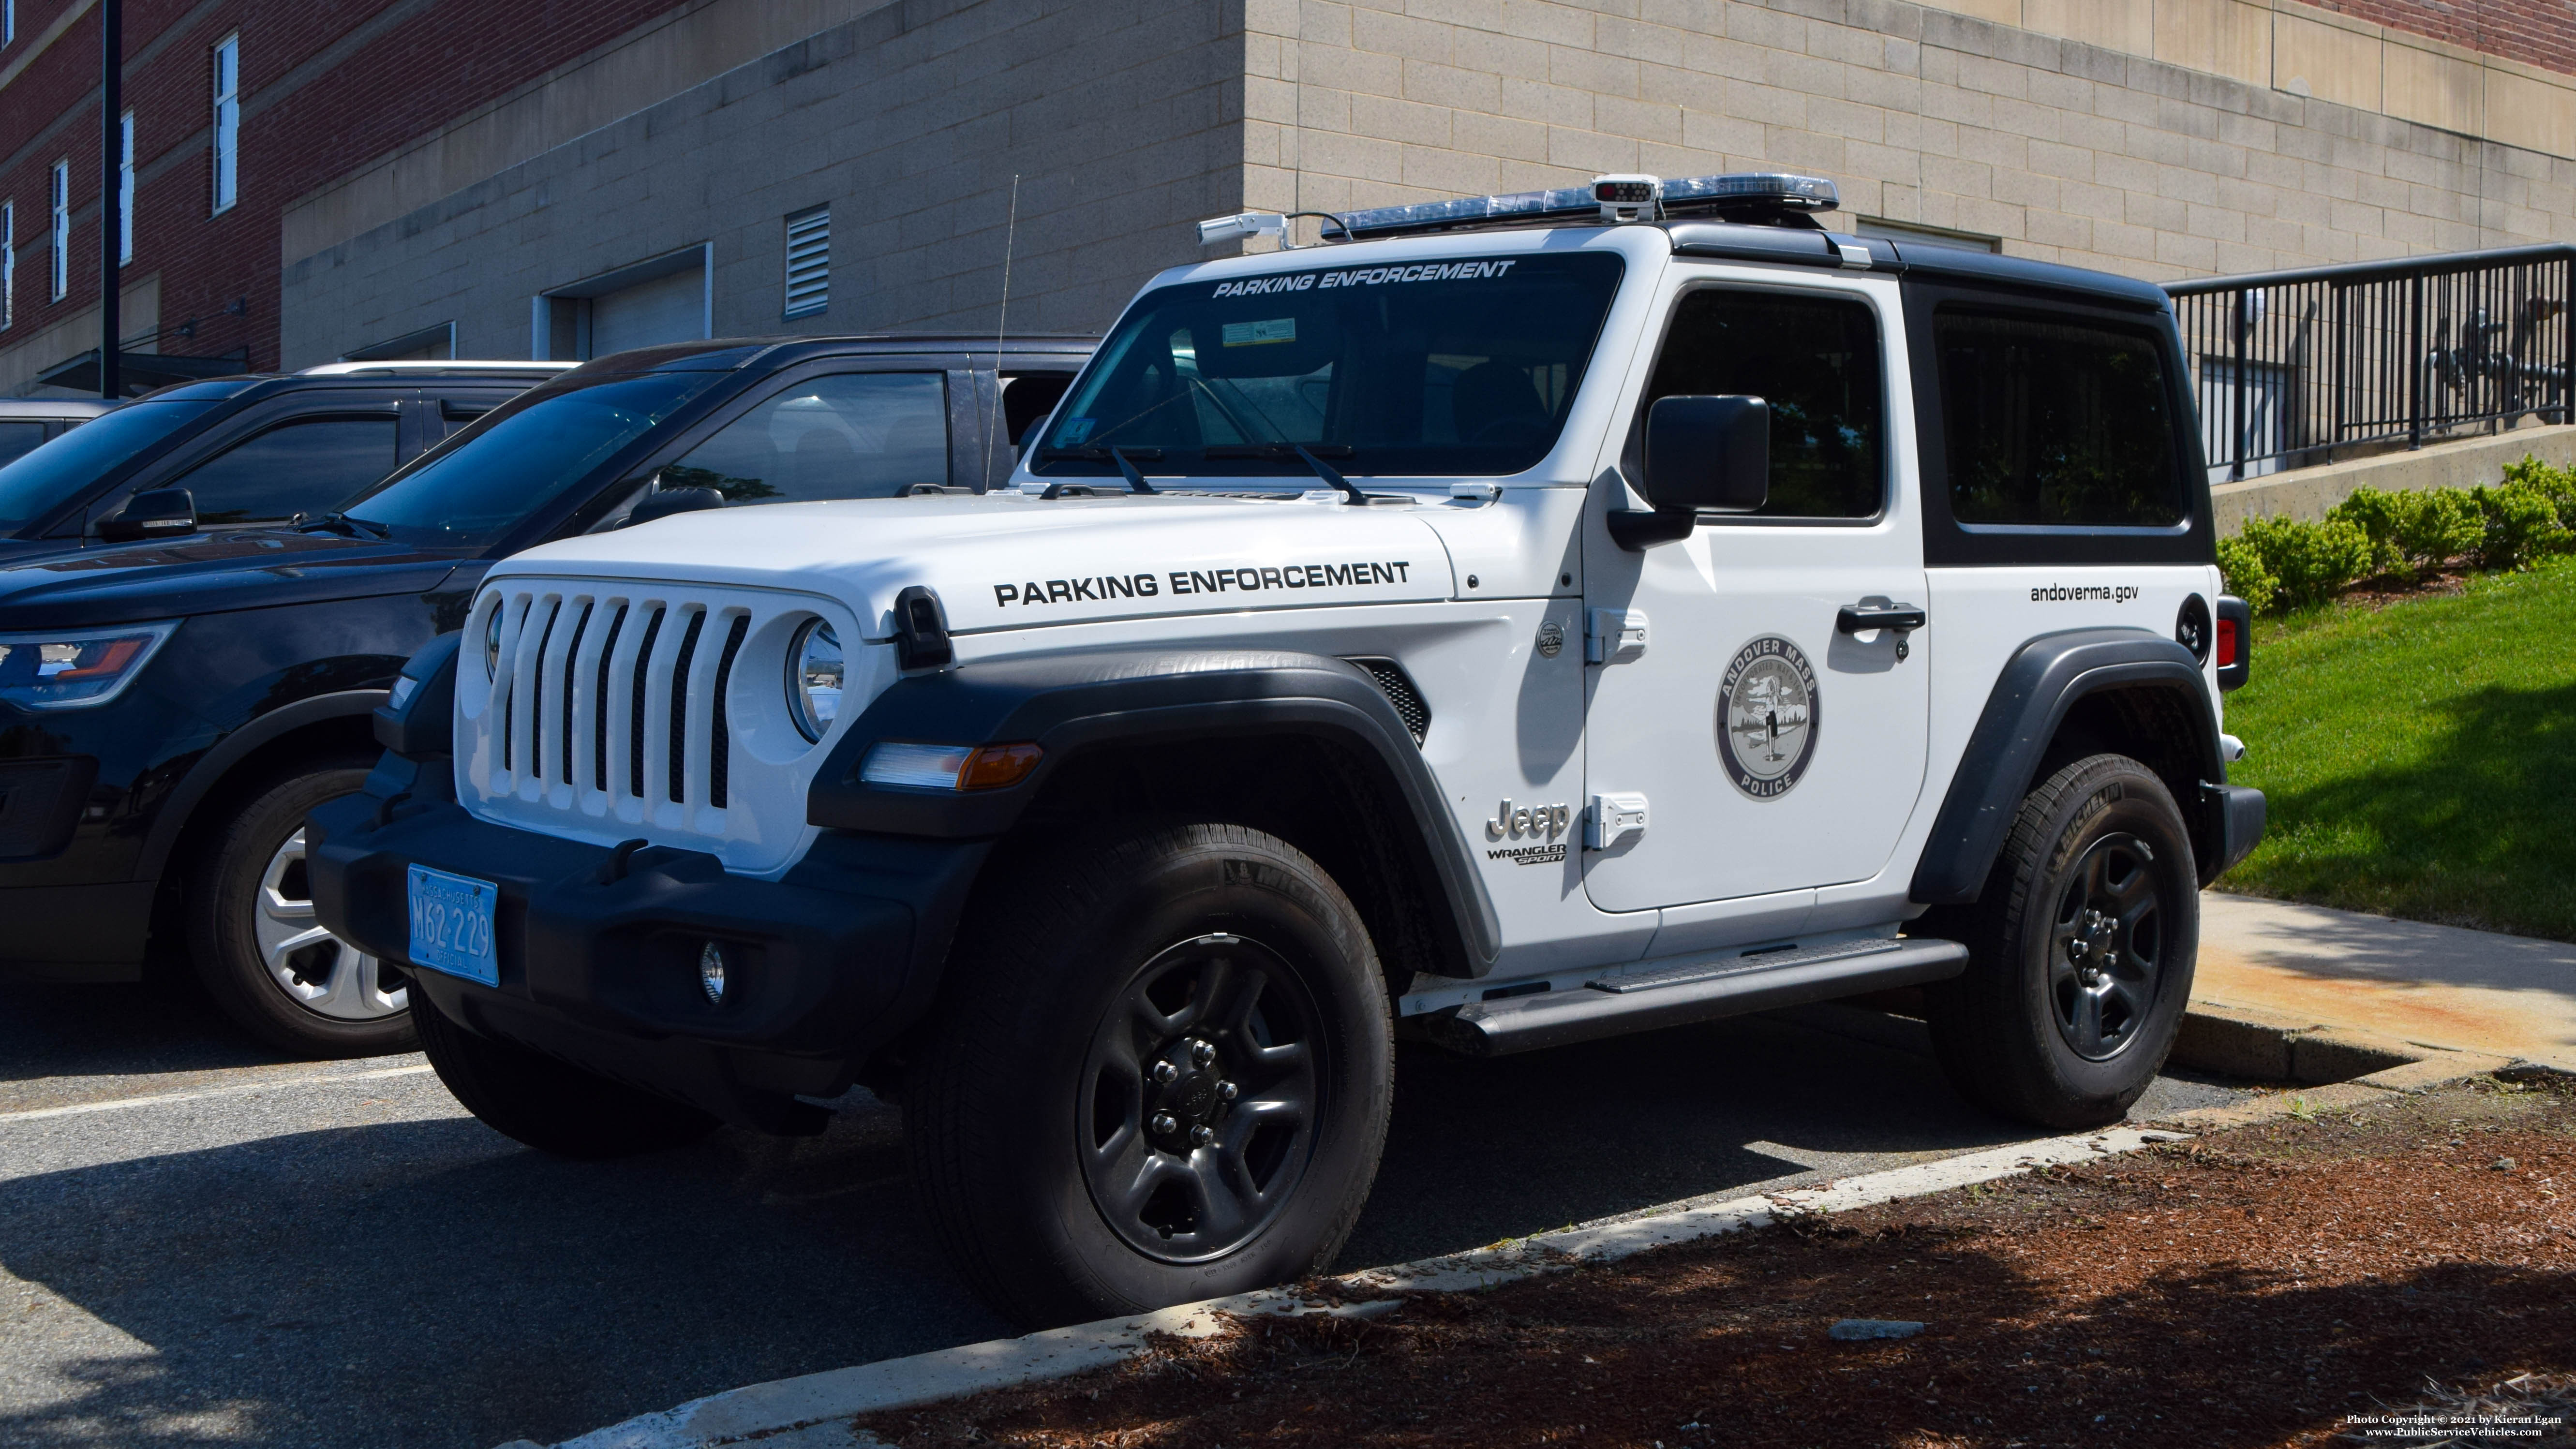 A photo  of Andover Police
            Parking Enforcement Unit, a 2020 Jeep Wrangler             taken by Kieran Egan